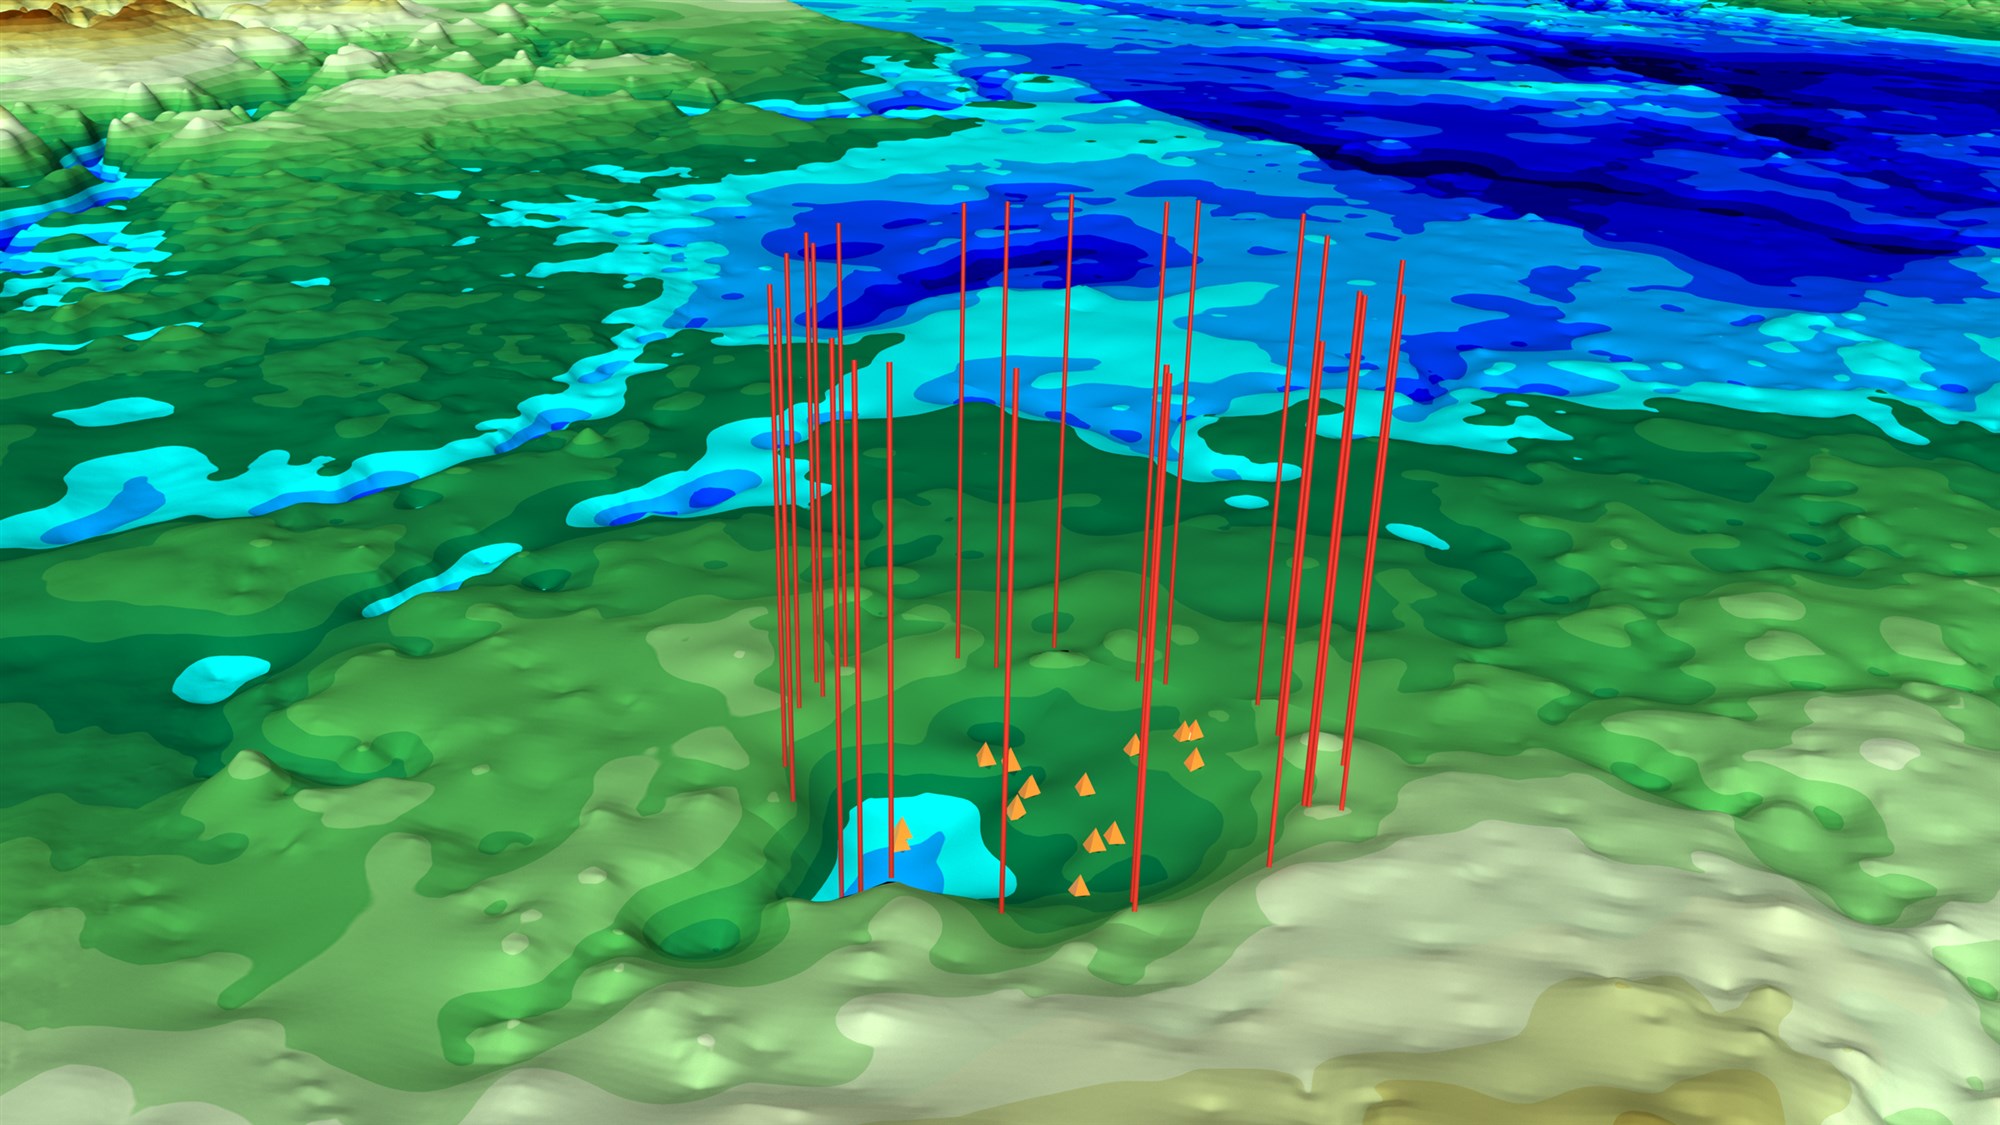 The possible impact crater. Image Credit: NASA Scientific Visualization Studio